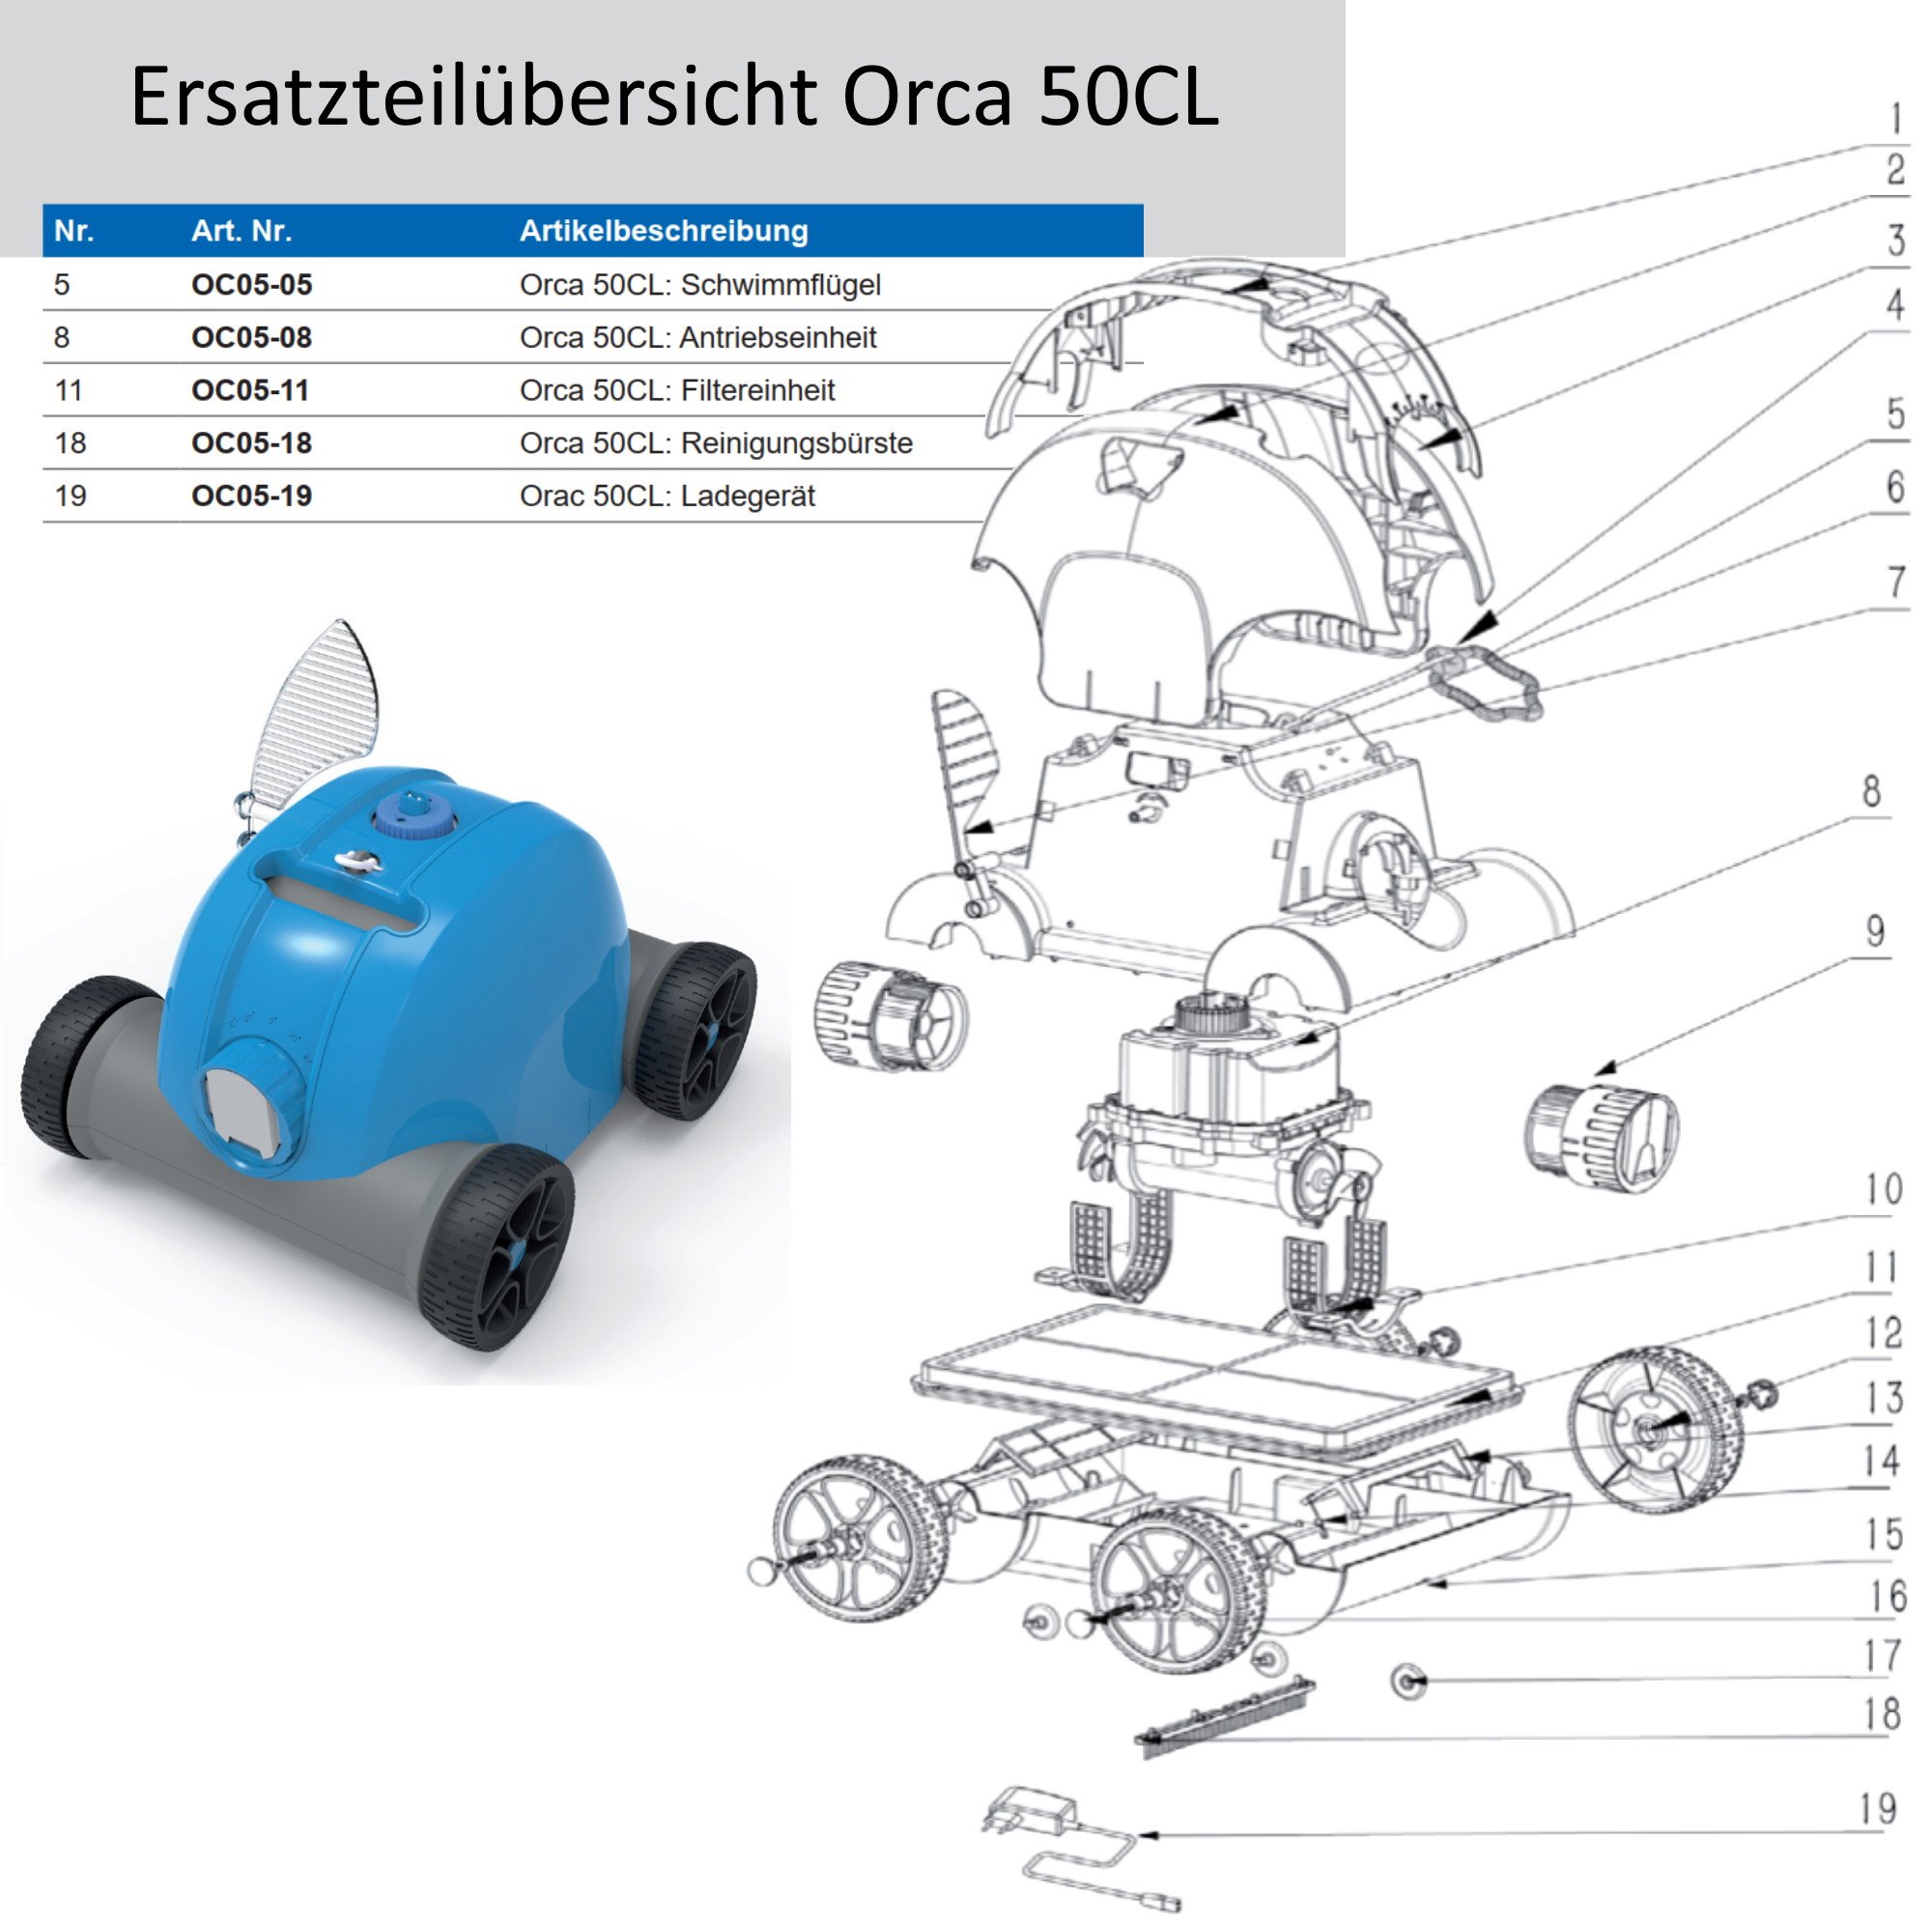 Orca 50CL: Antriebseinheit